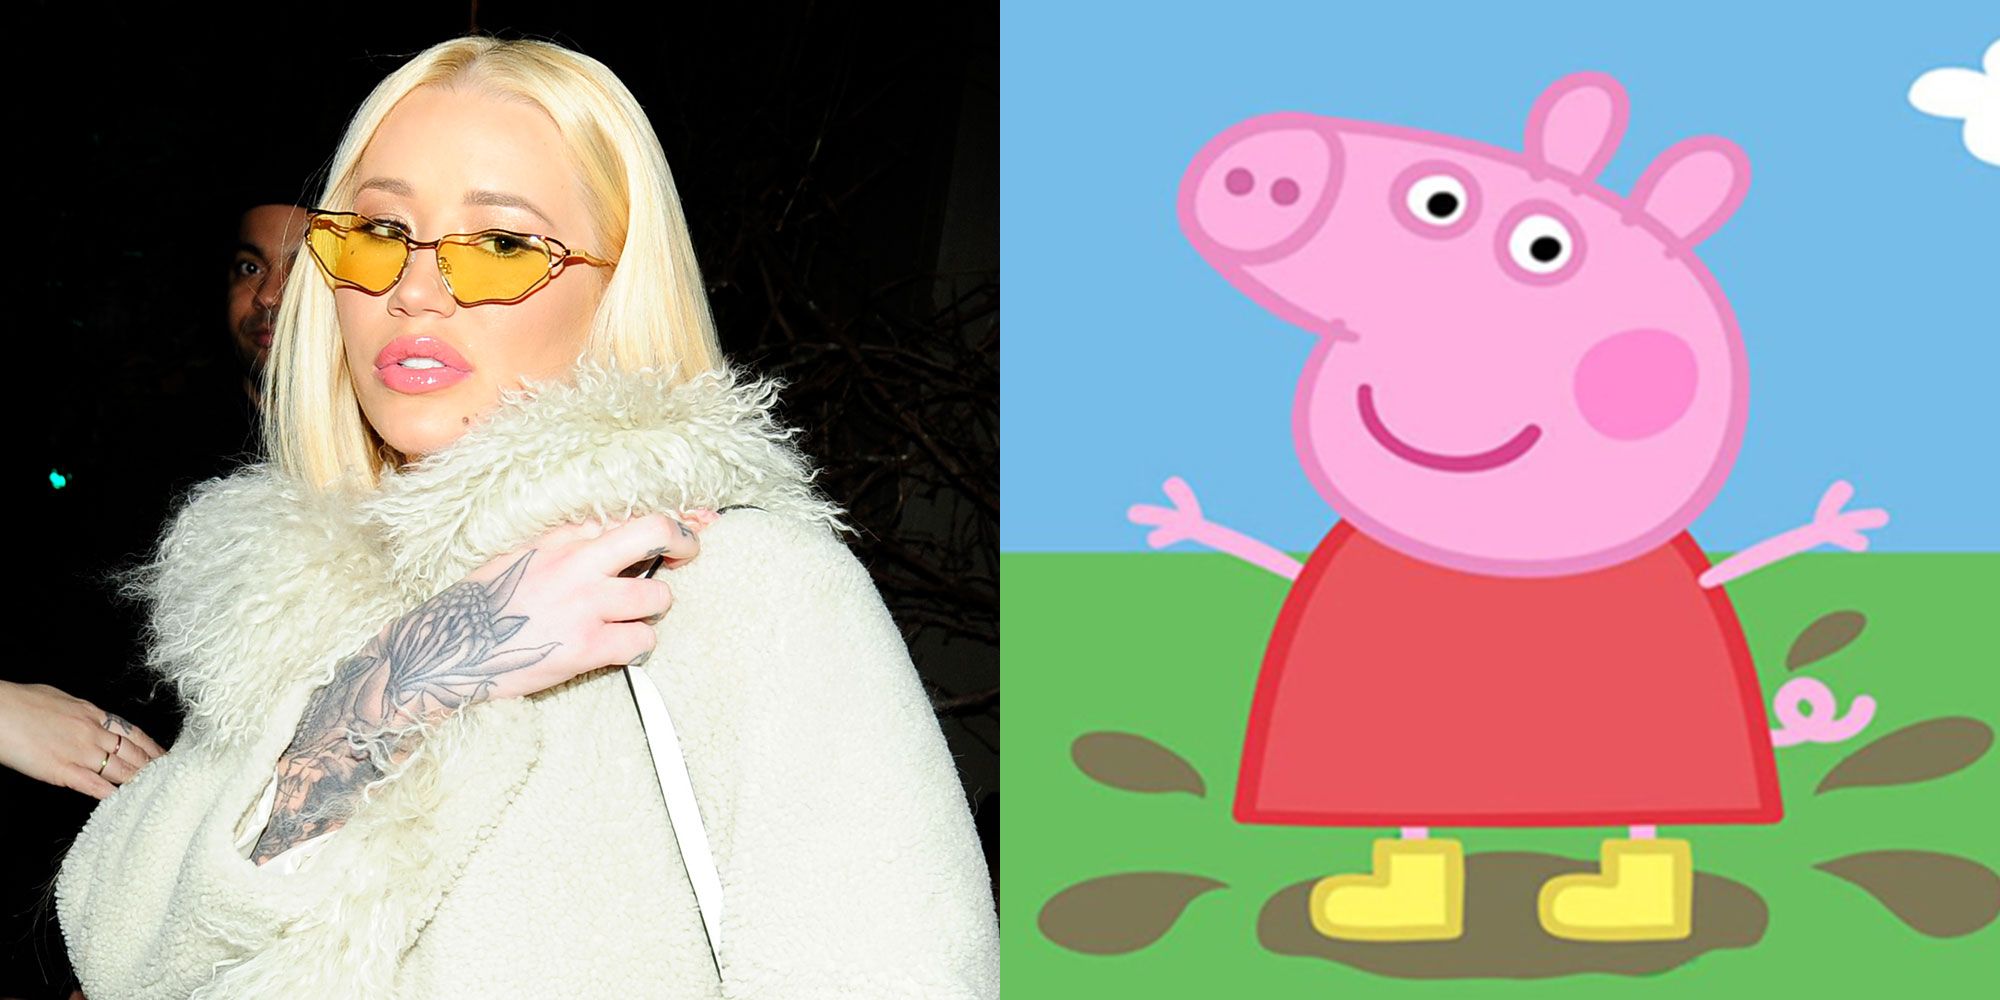 Celebrity Porn Iggy - Iggy Azalea Is Feuding With Cartoon Peppa Pig Over Album Releases